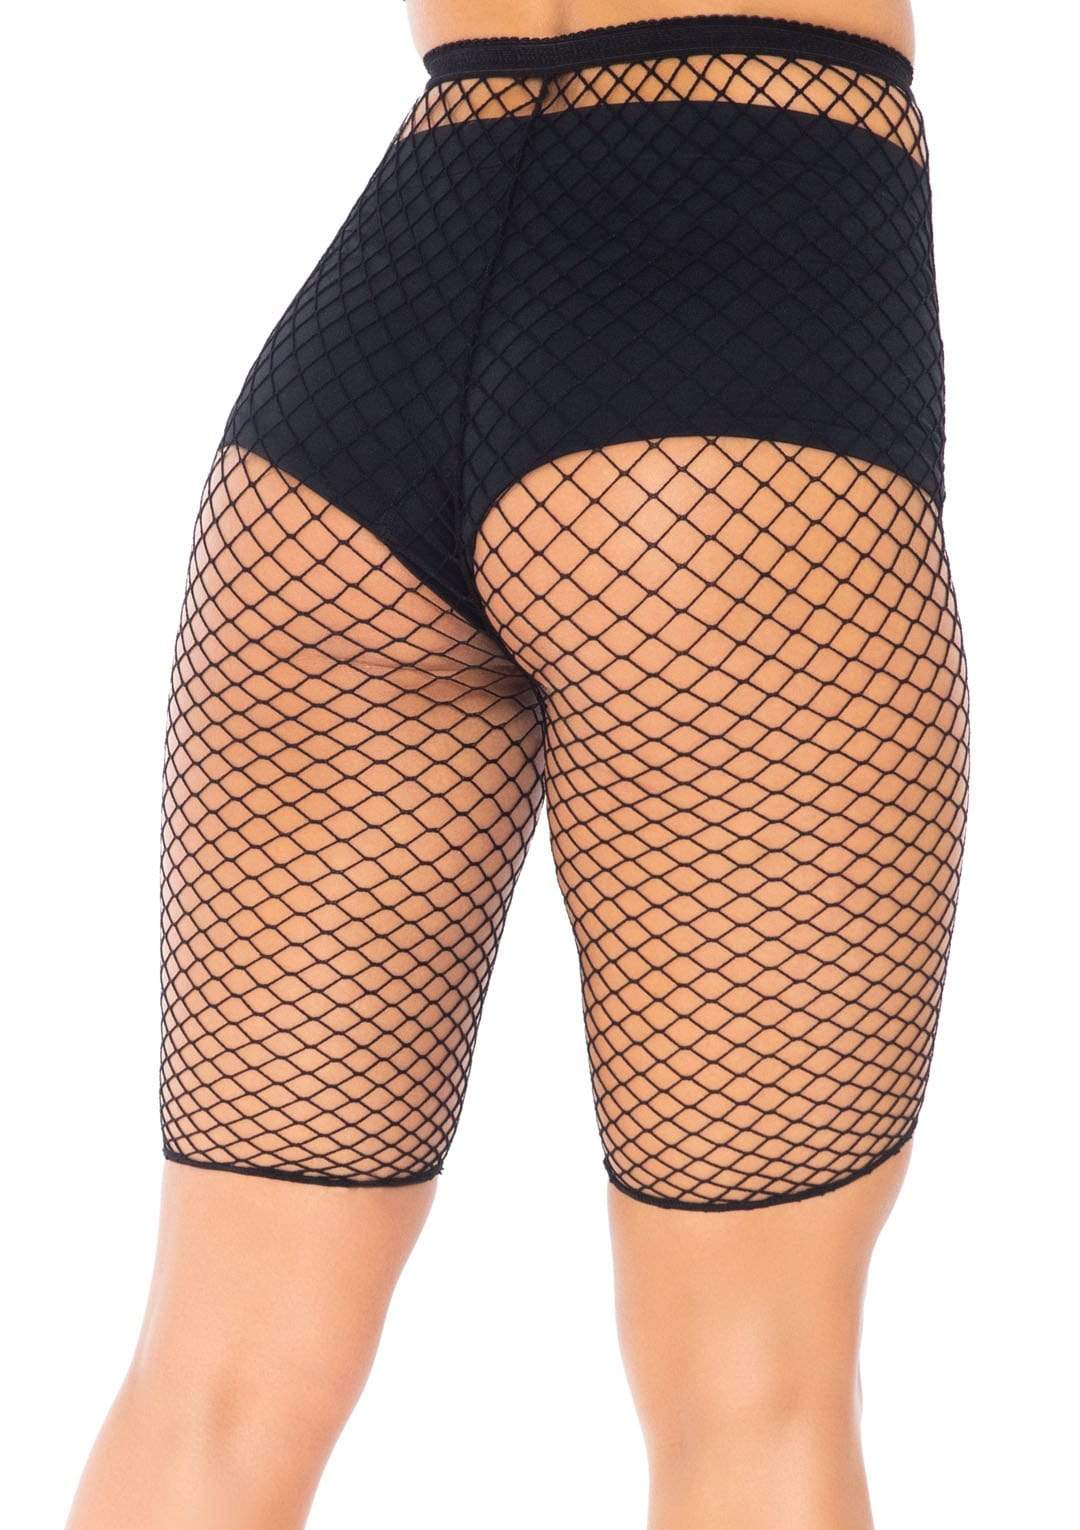 Fishnet Form Fitting Biker Shorts